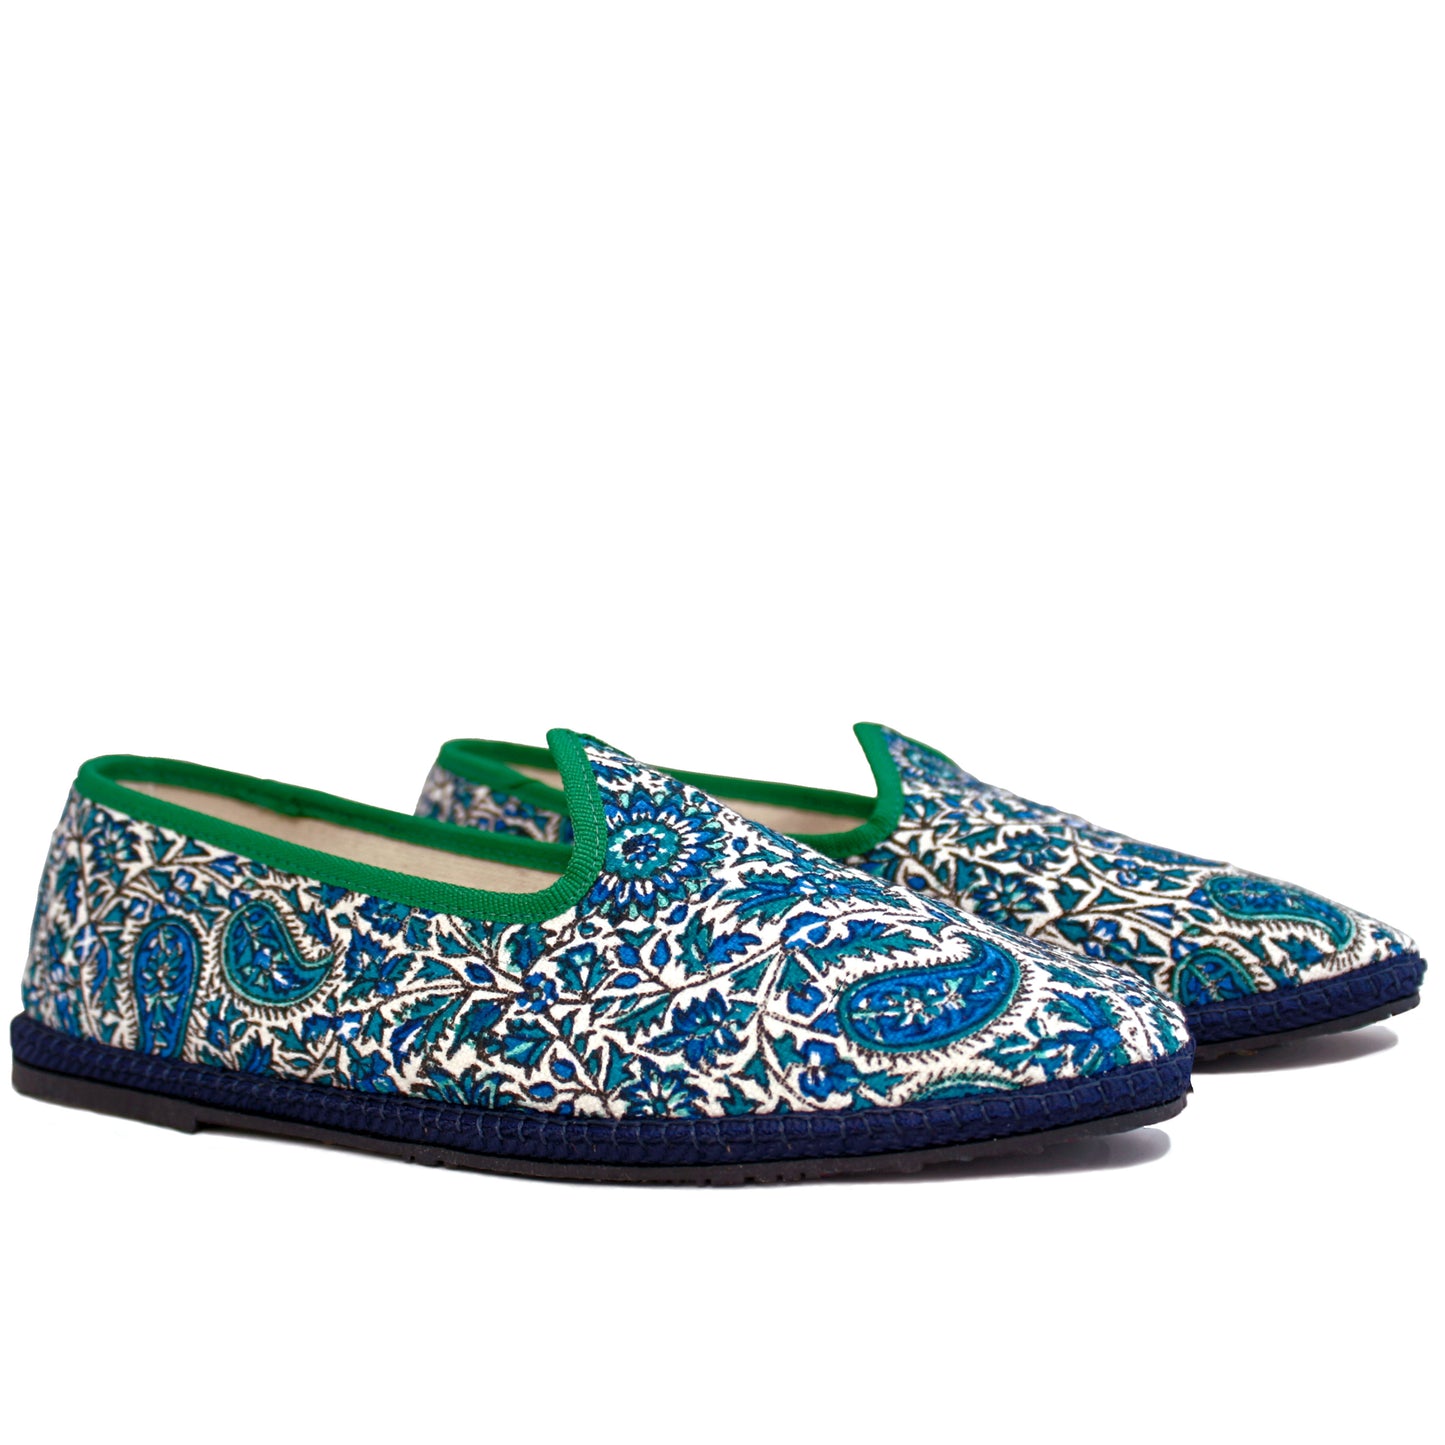 'Bâdum' Blue Floral Venetian Slippers